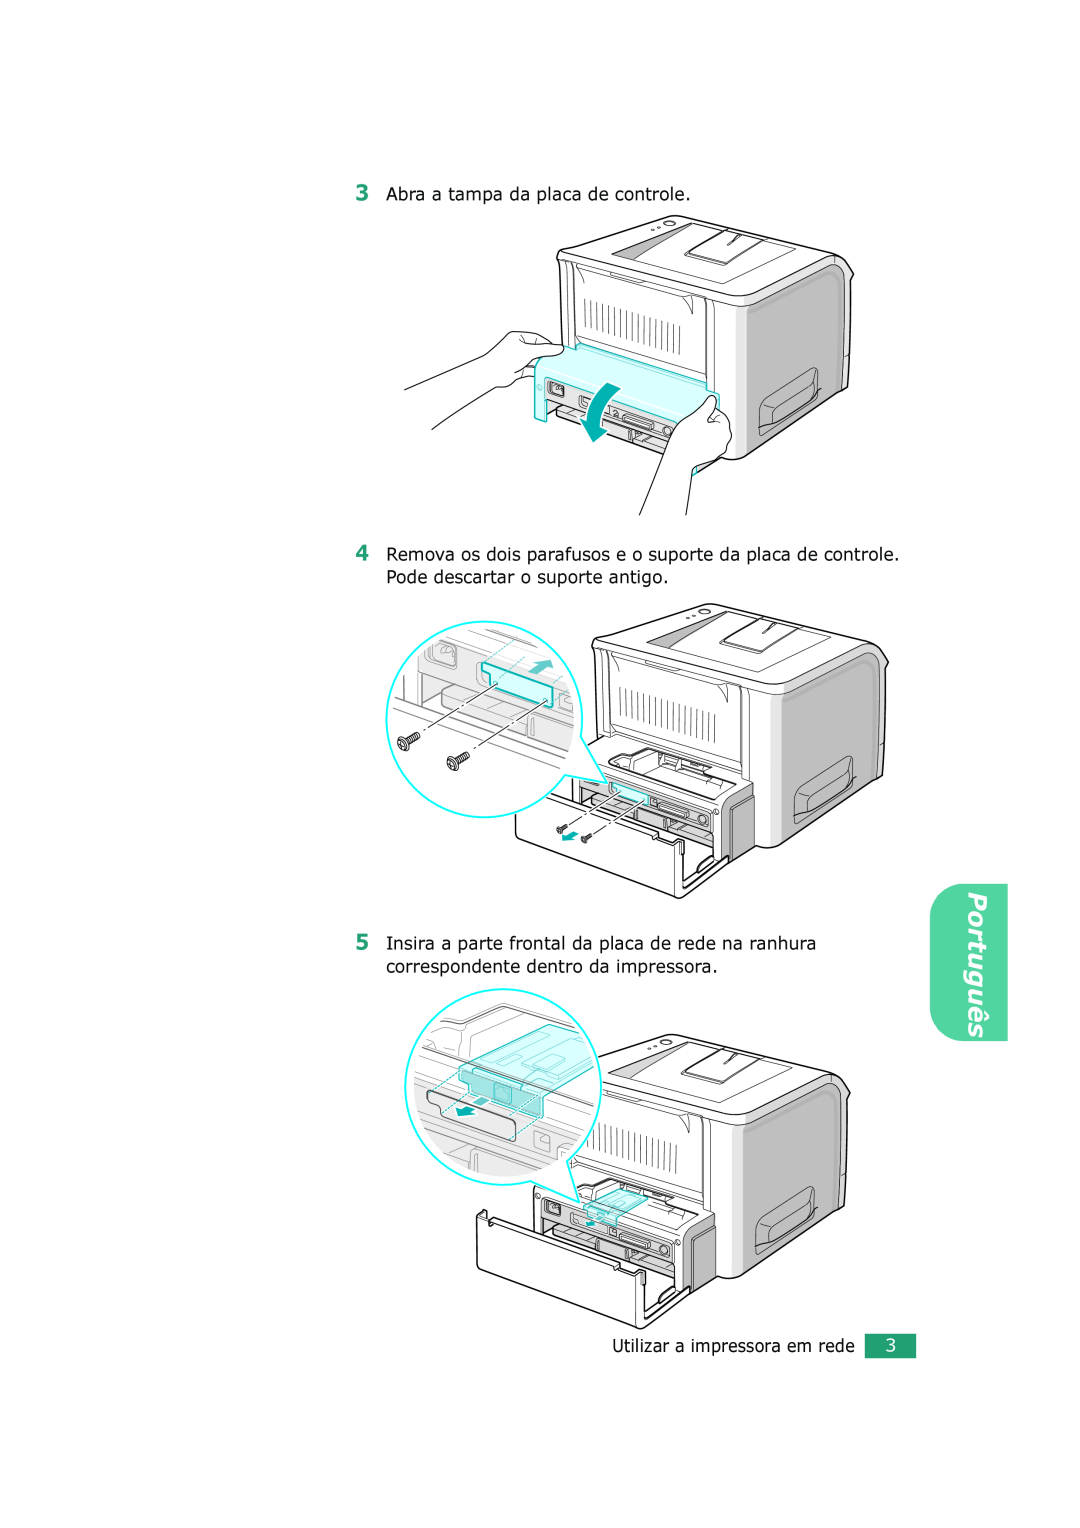 Xerox 3150 manual Português, Abra a tampa da placa de controle, Utilizar a impressora em rede 